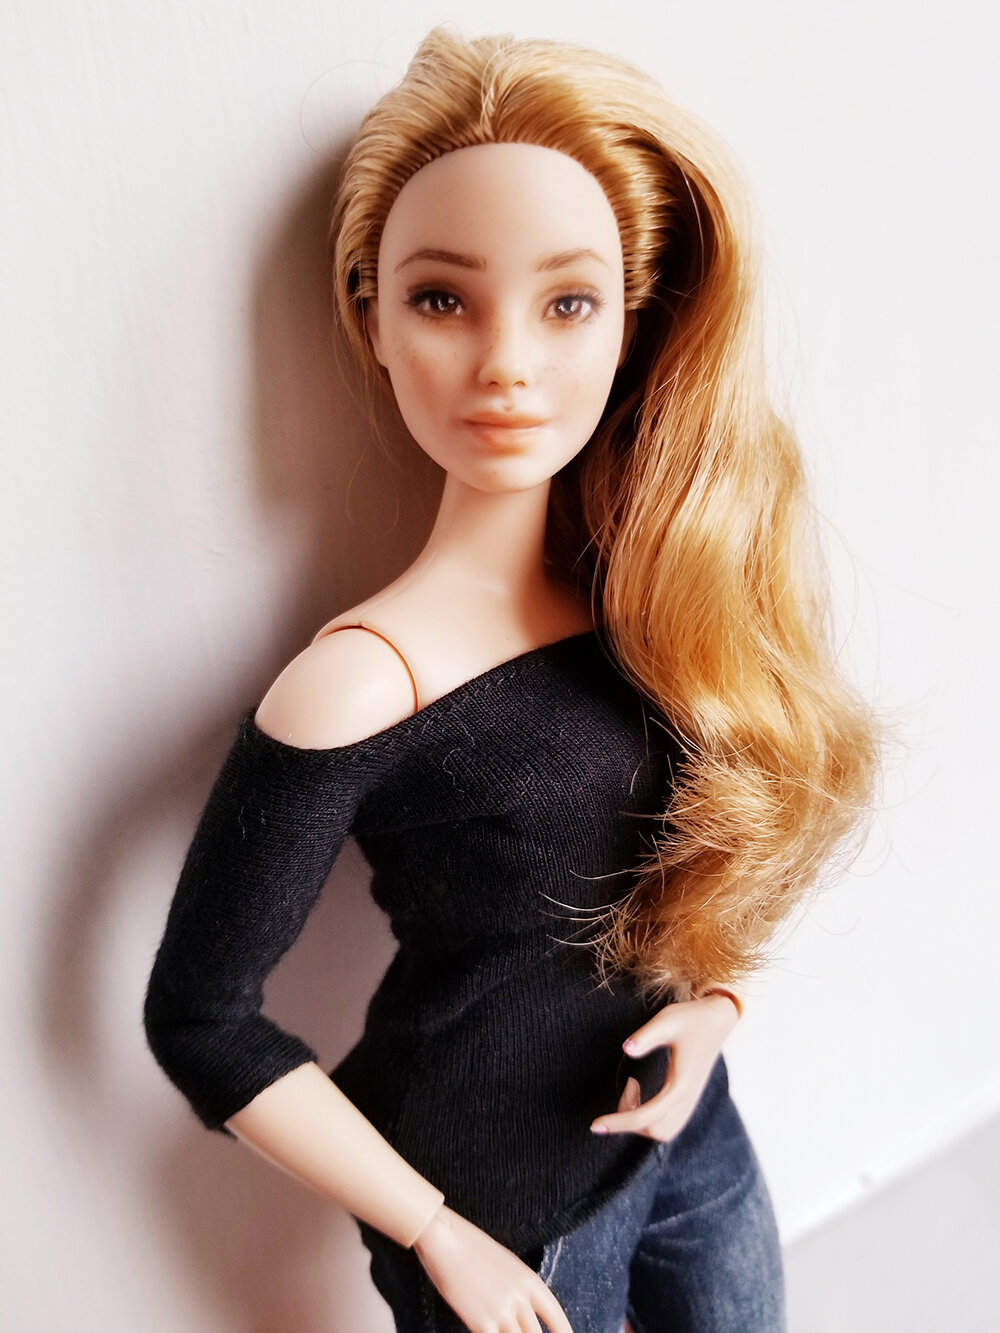 barbie made to move curvy